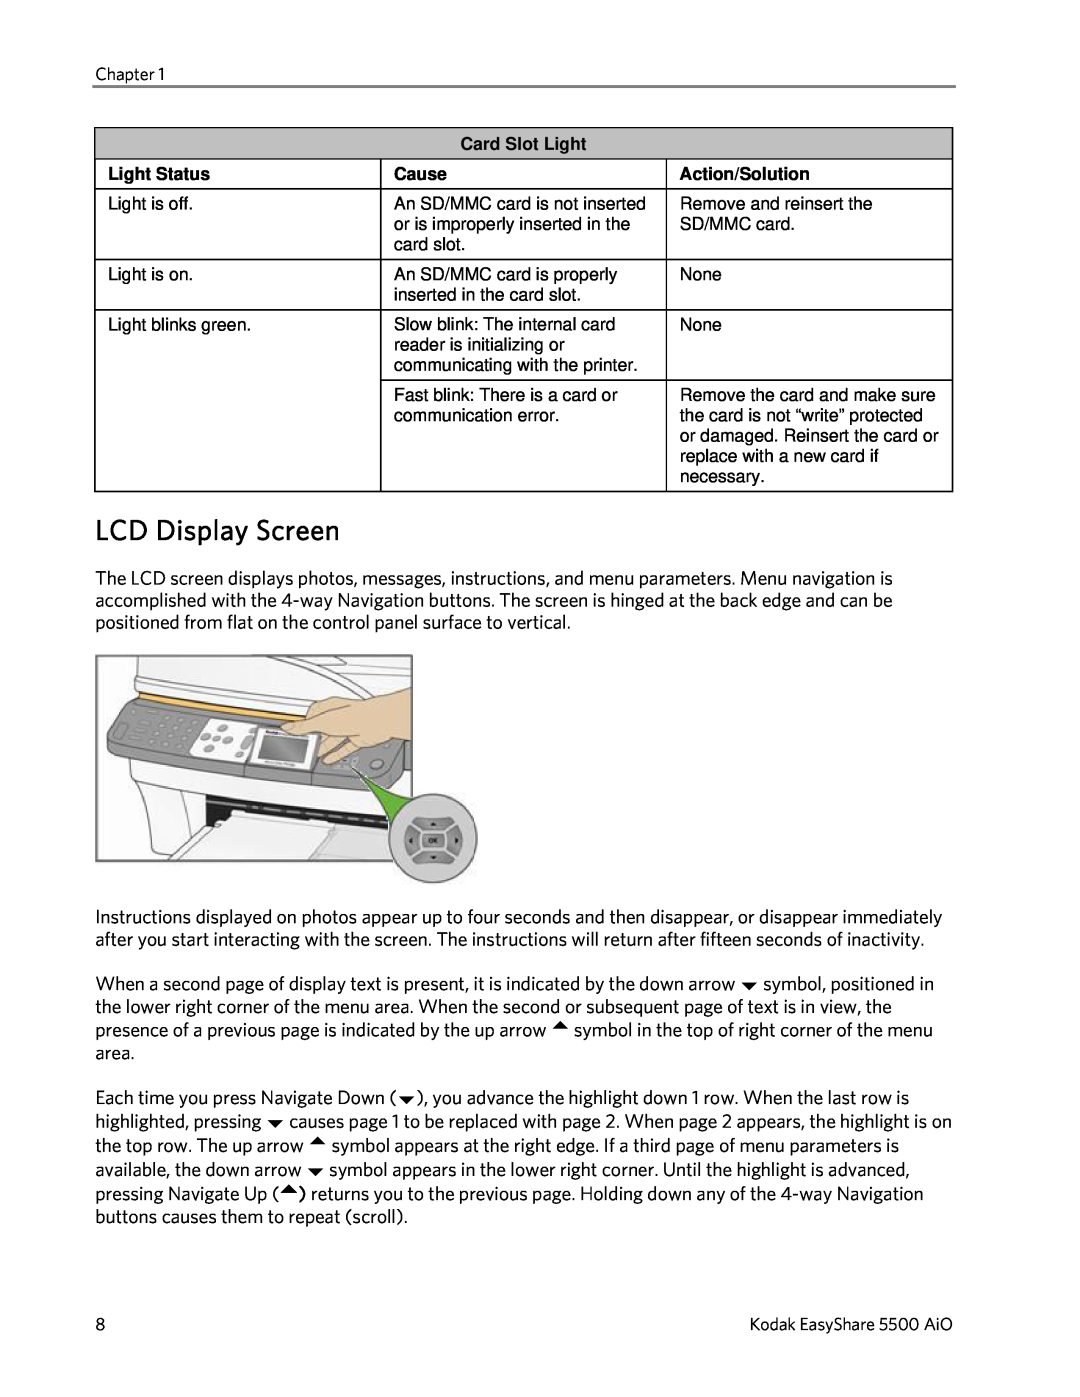 Kodak 5500 manual LCD Display Screen, Card Slot Light, Light Status, Cause, Action/Solution 